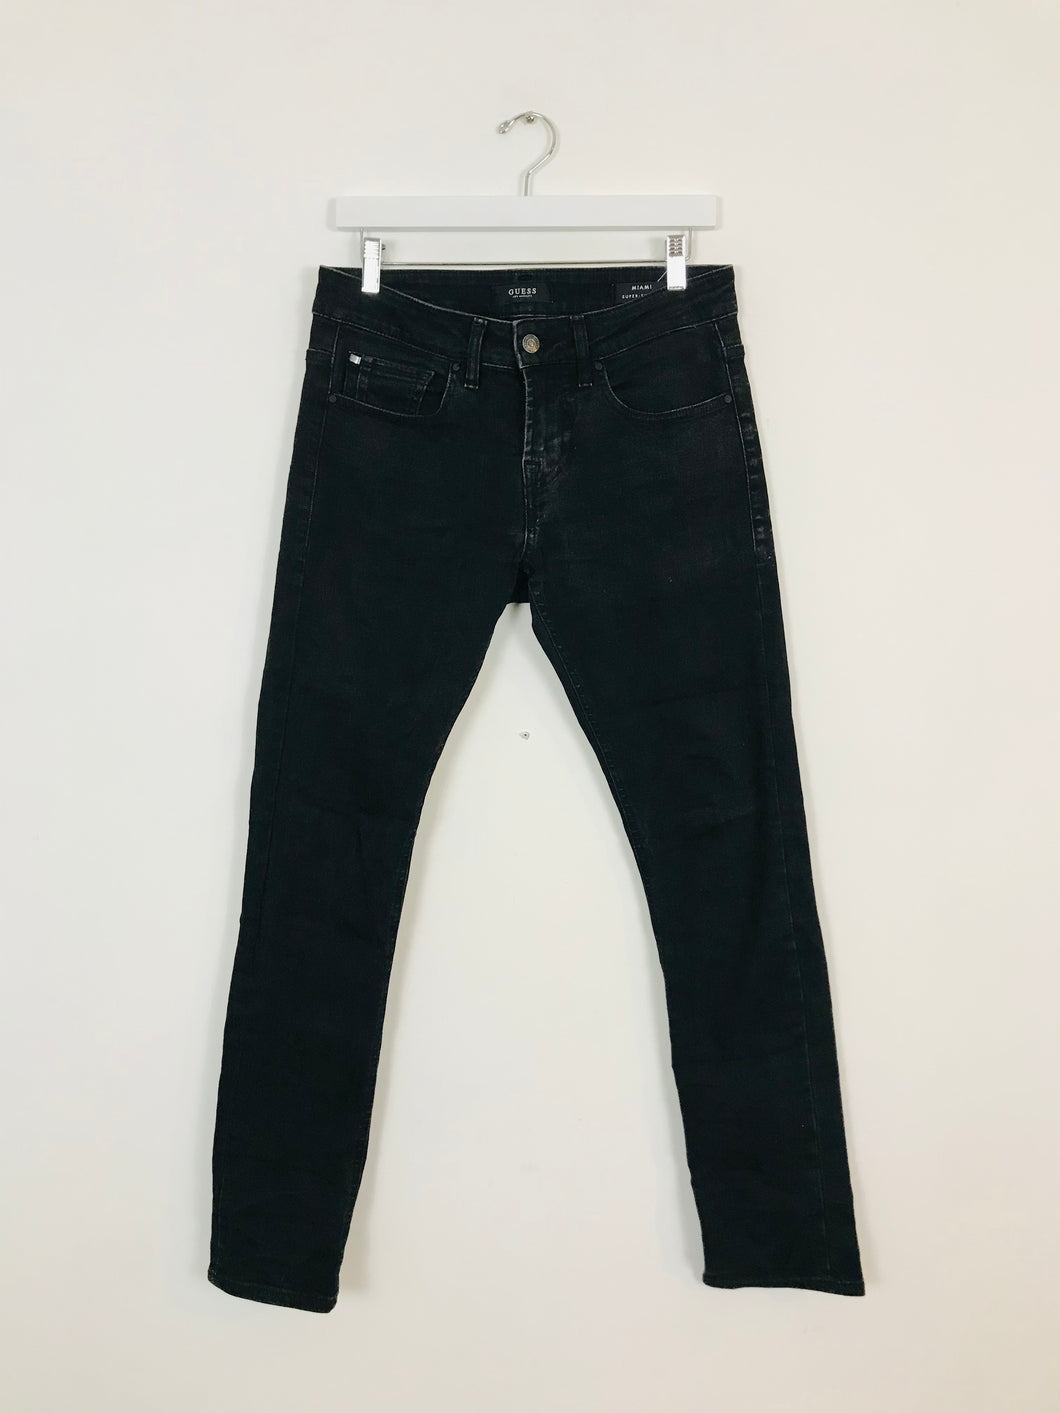 Guess Men’s Super Skinny Jeans | 29 W31 L31 | Black